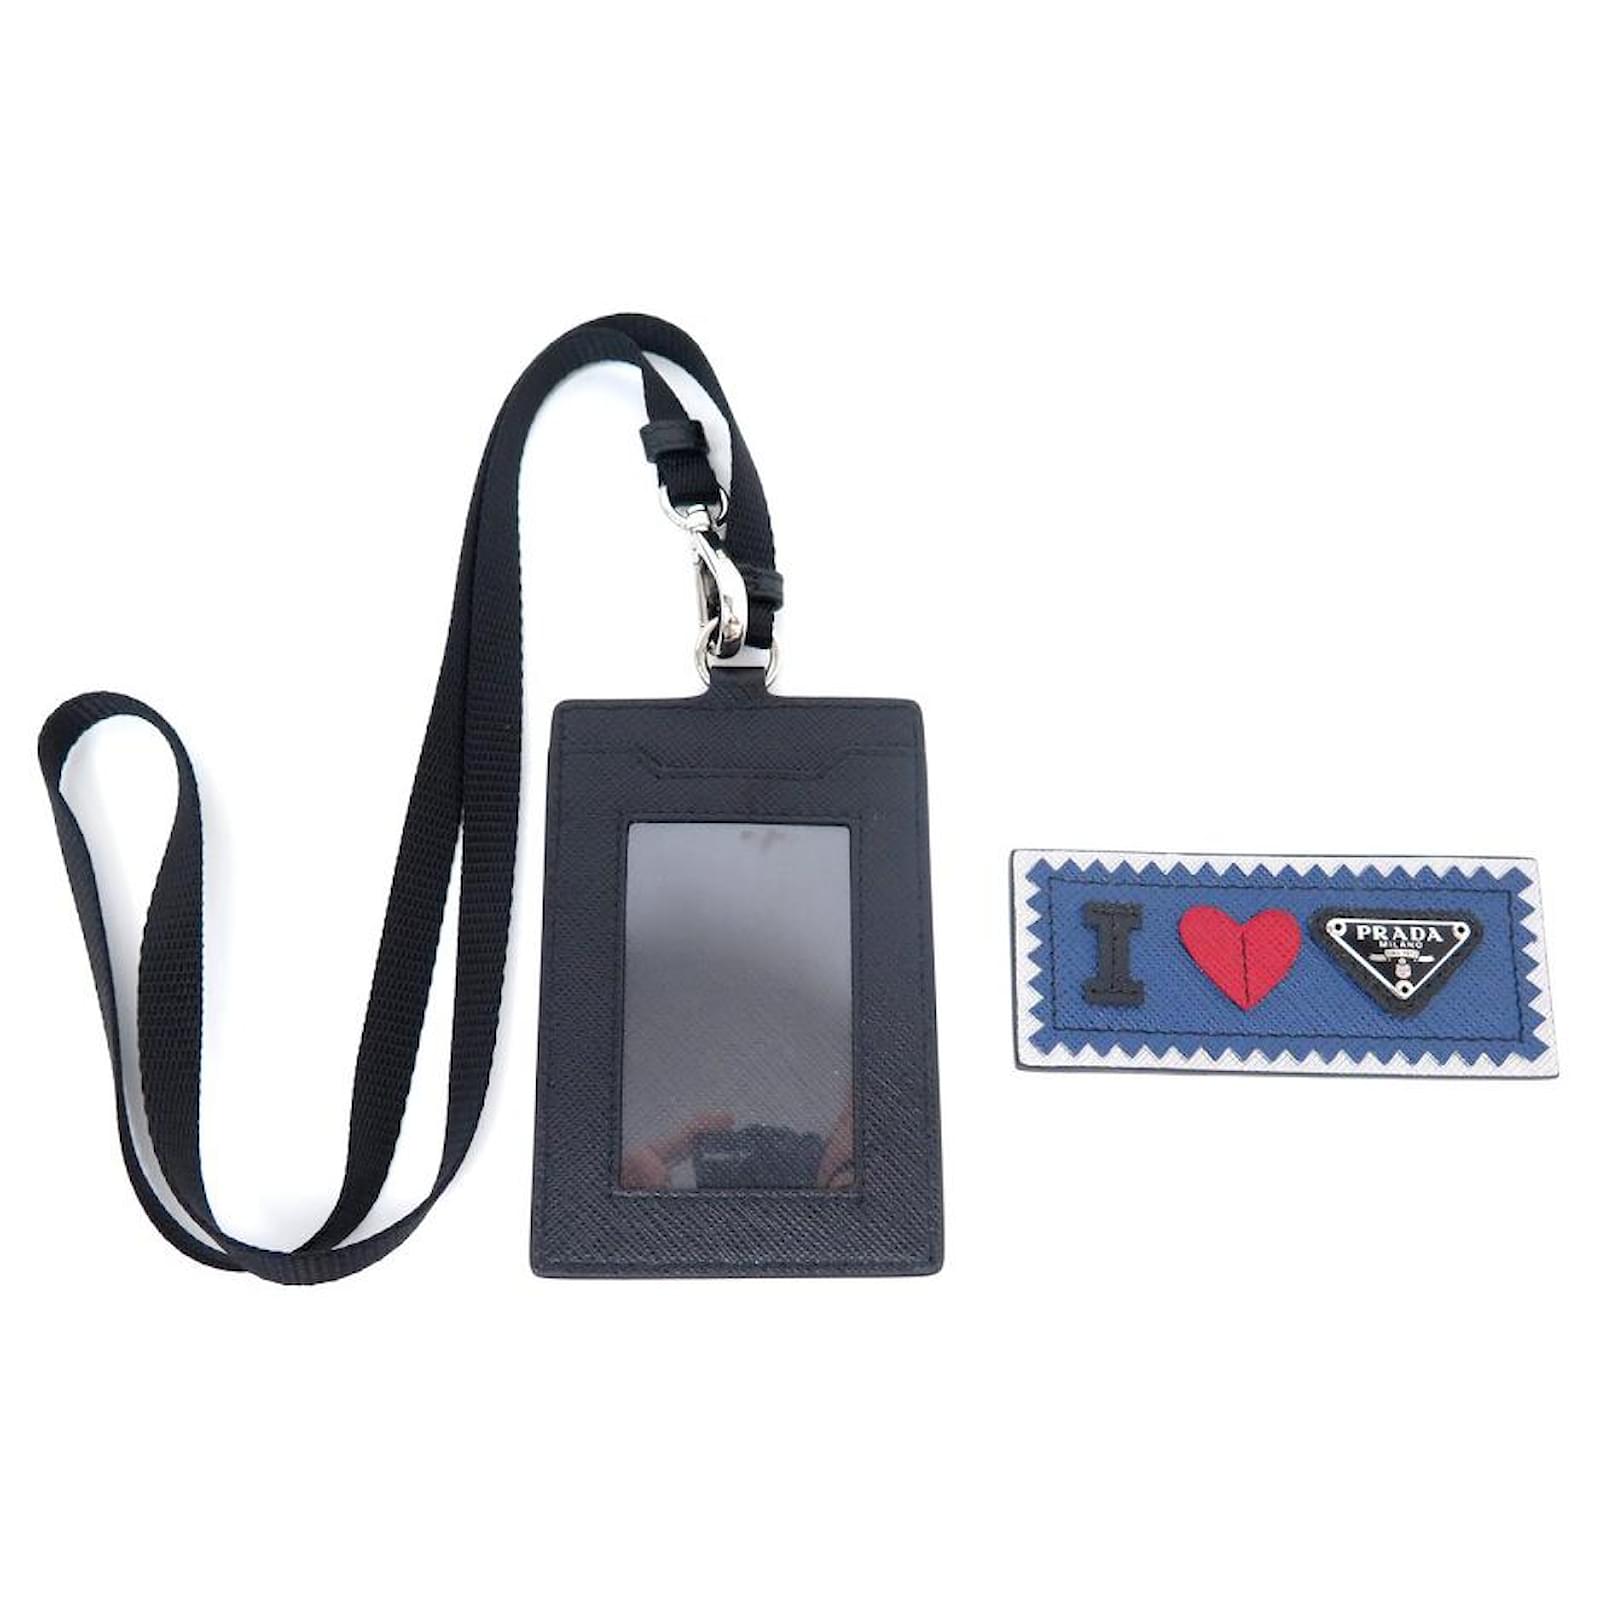 Prada Black Saffiano badge holder